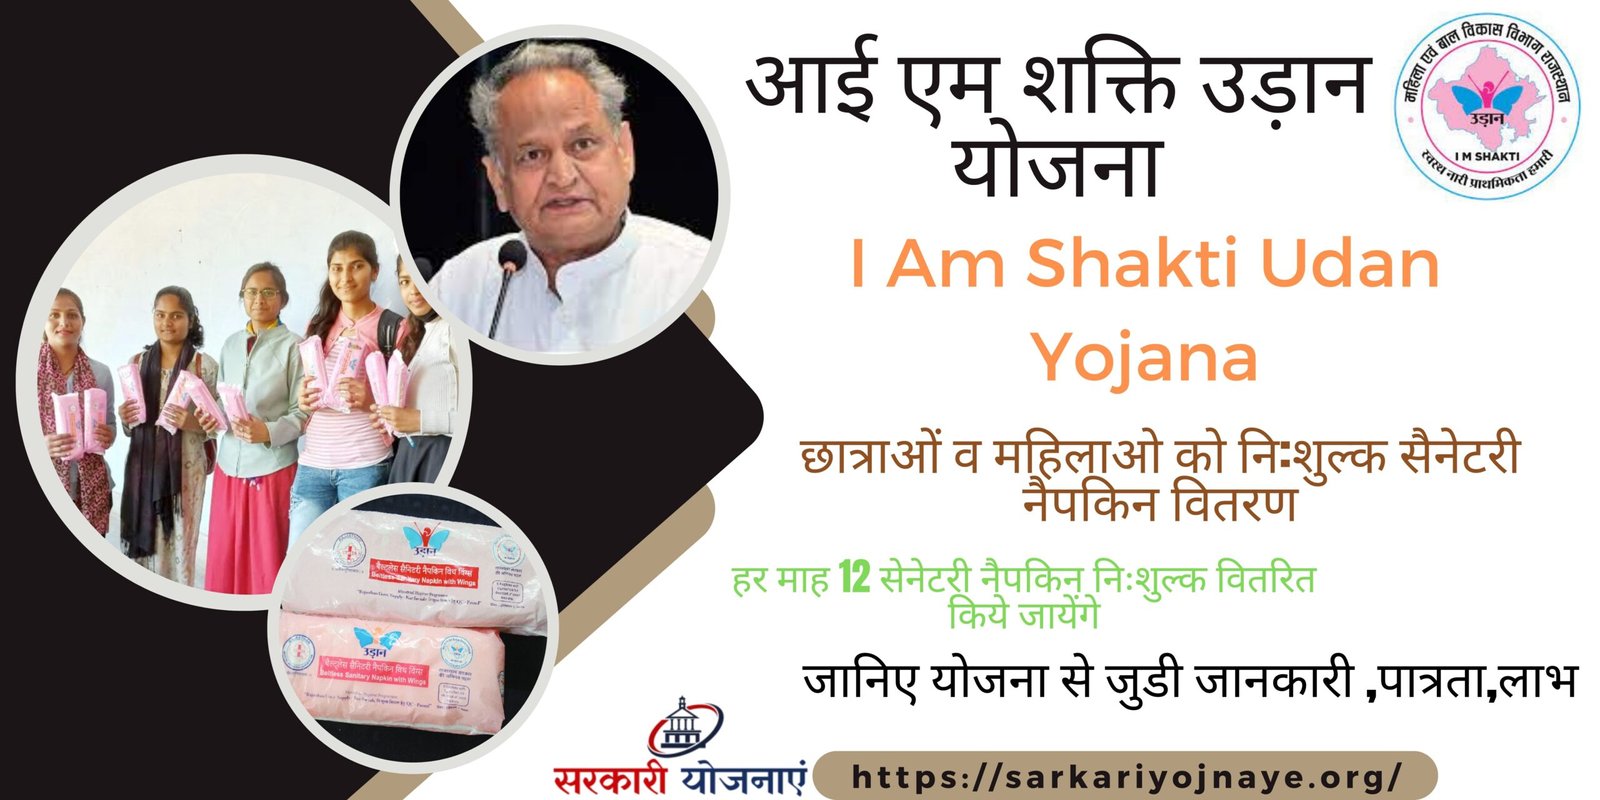 I Am Shakti Udan Yojana